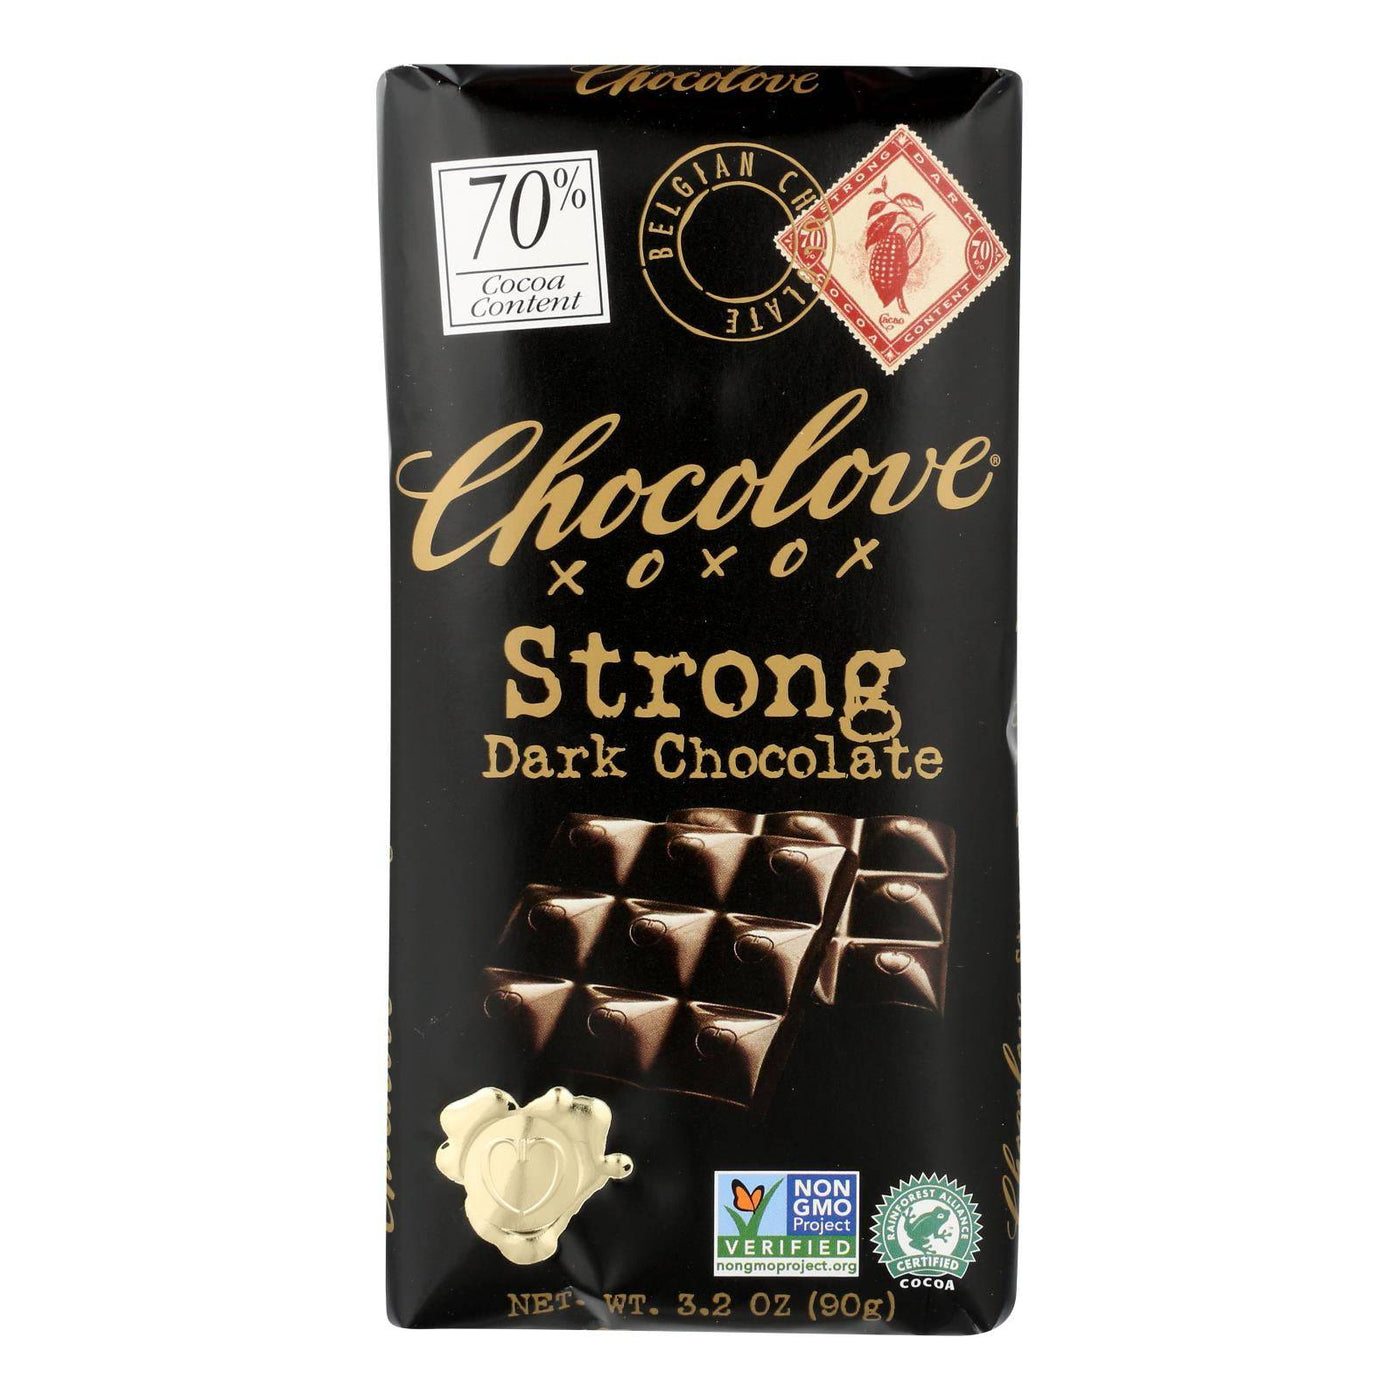 Chocolove Xoxox - Premium Chocolate Bar - Dark Chocolate - Strong - 3.2 Oz Bars - Case Of 12 | OnlyNaturals.us